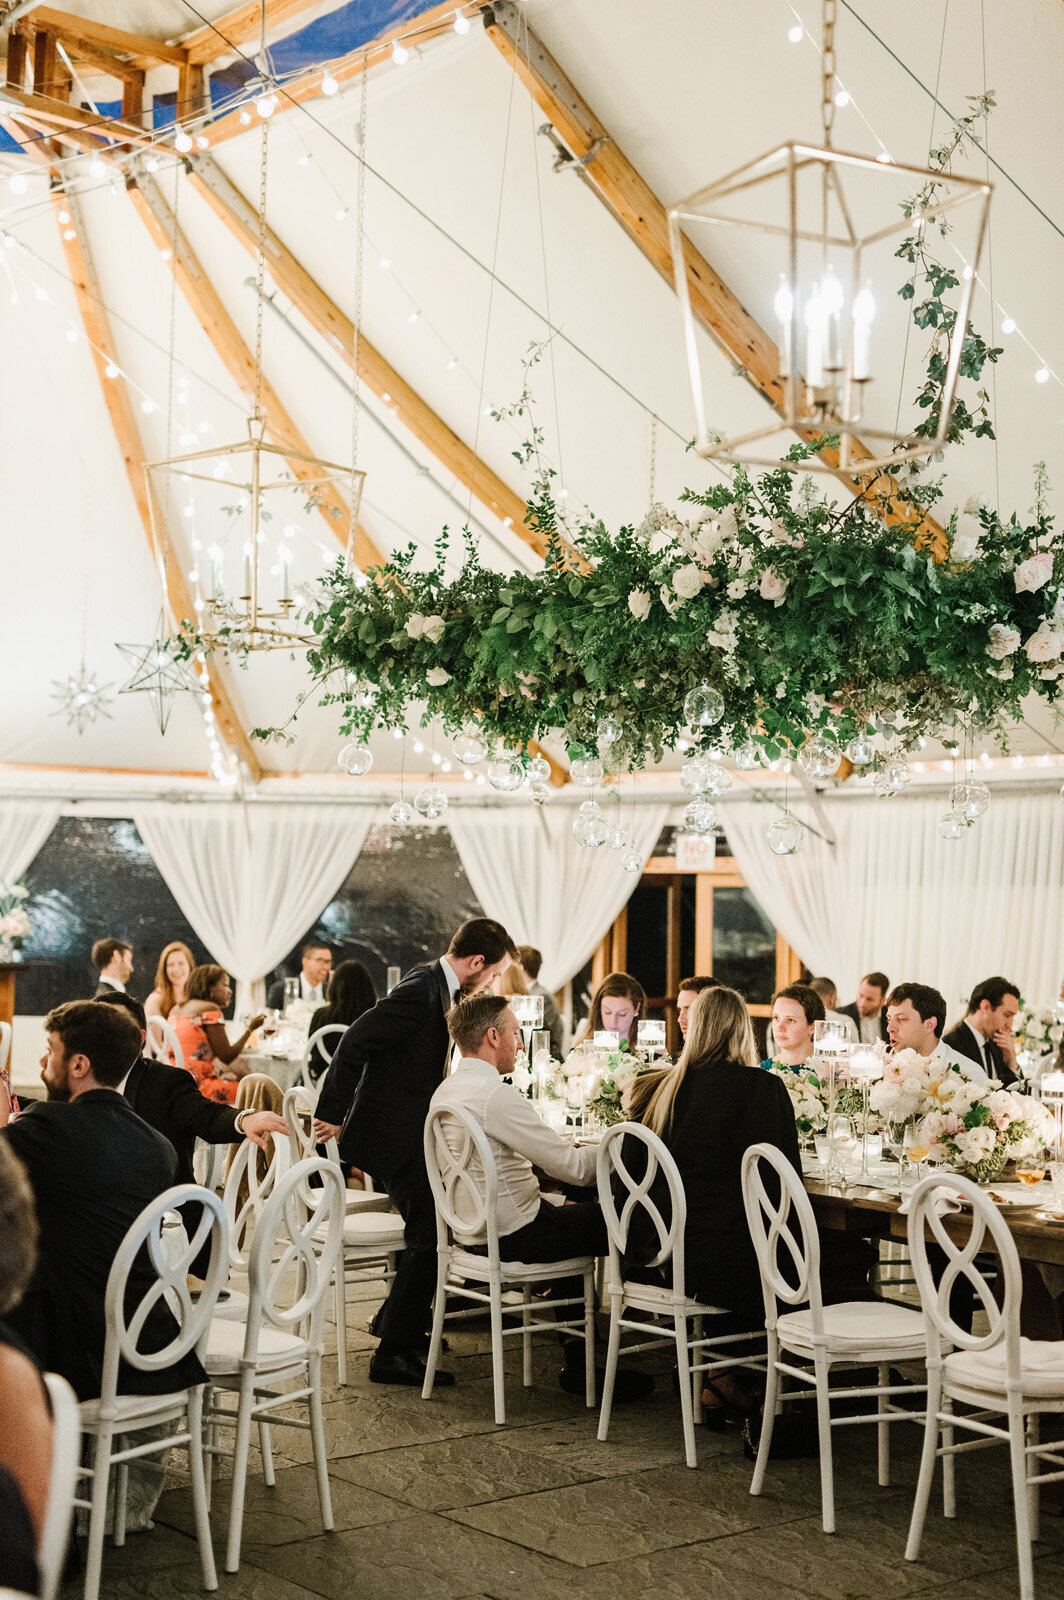 Kate-Murtaugh-Events-Newport-RI-Castle-Hill-Inn-dinner-bride-groom-wedding-planner